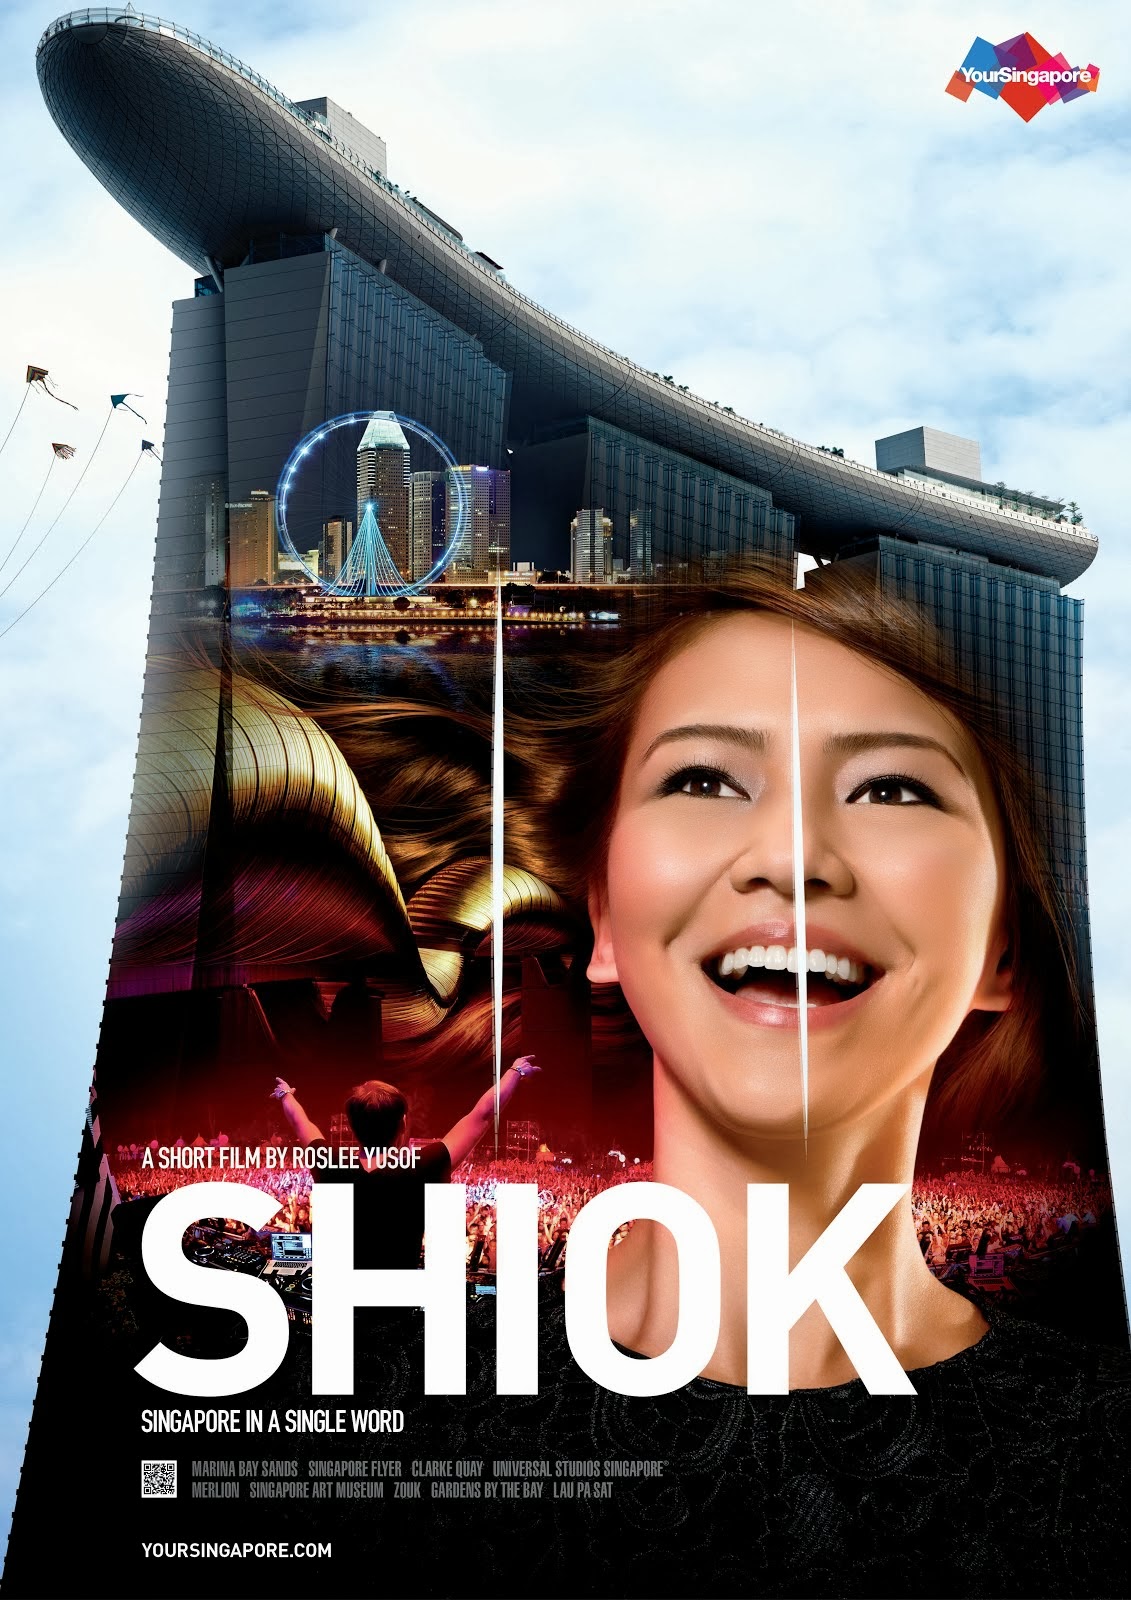 Singapore Tourism Board Print Ad (2)